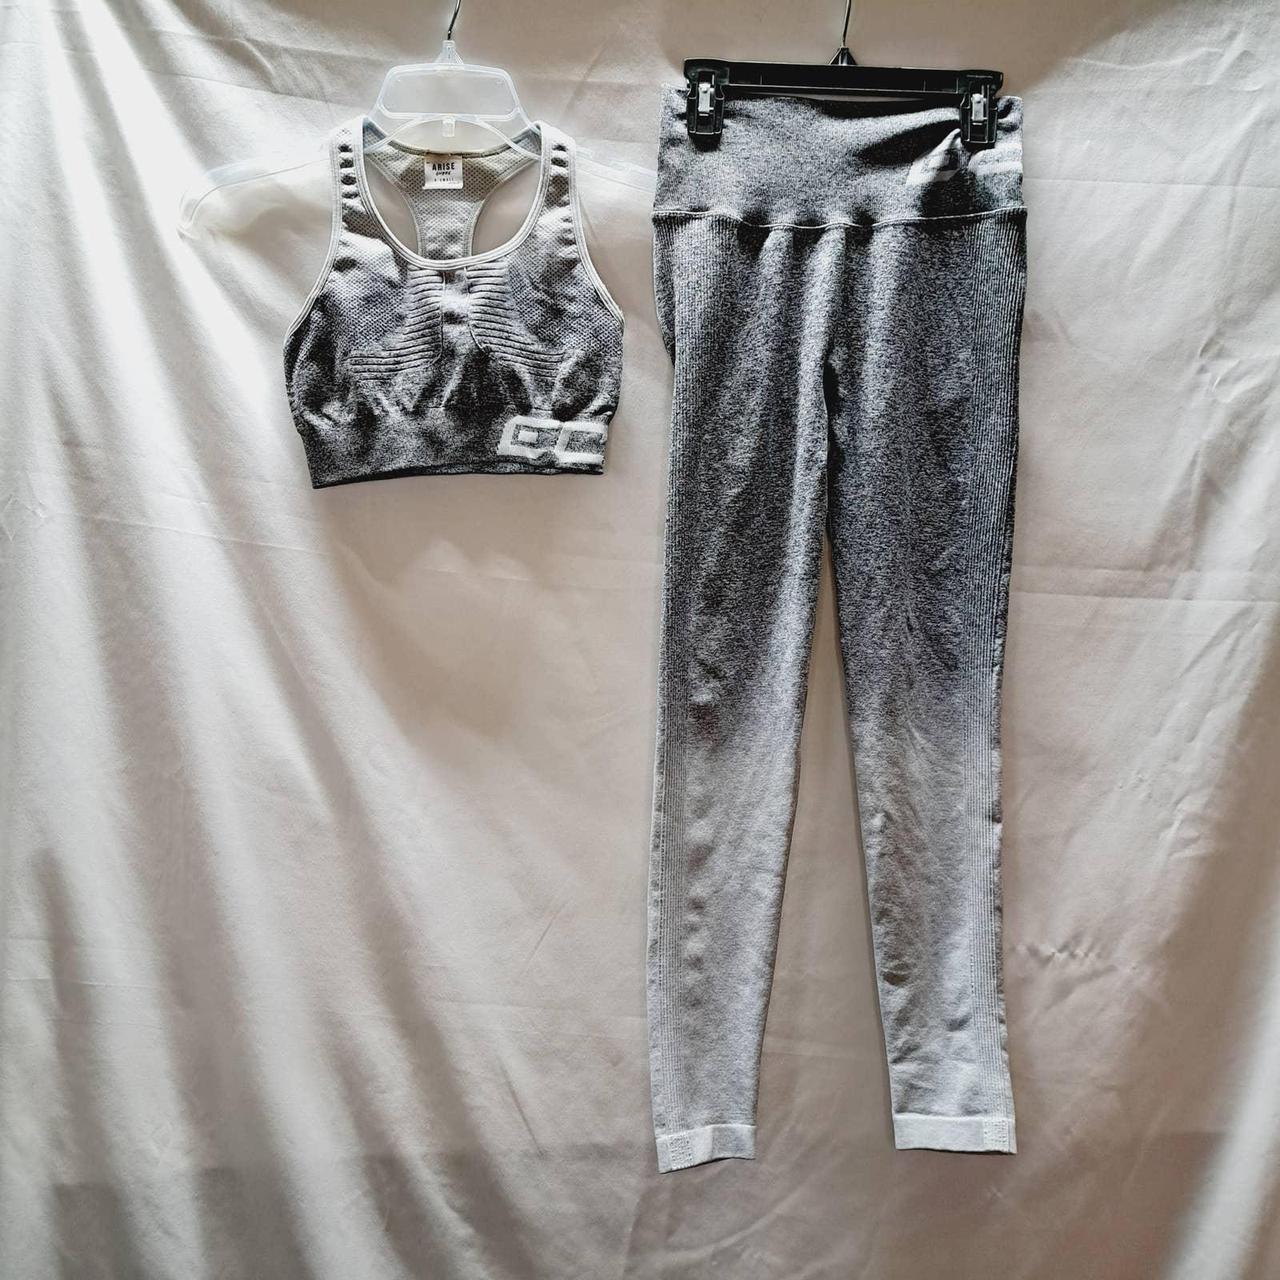 echt arise scrunch leggings v2 in charcoal - Depop